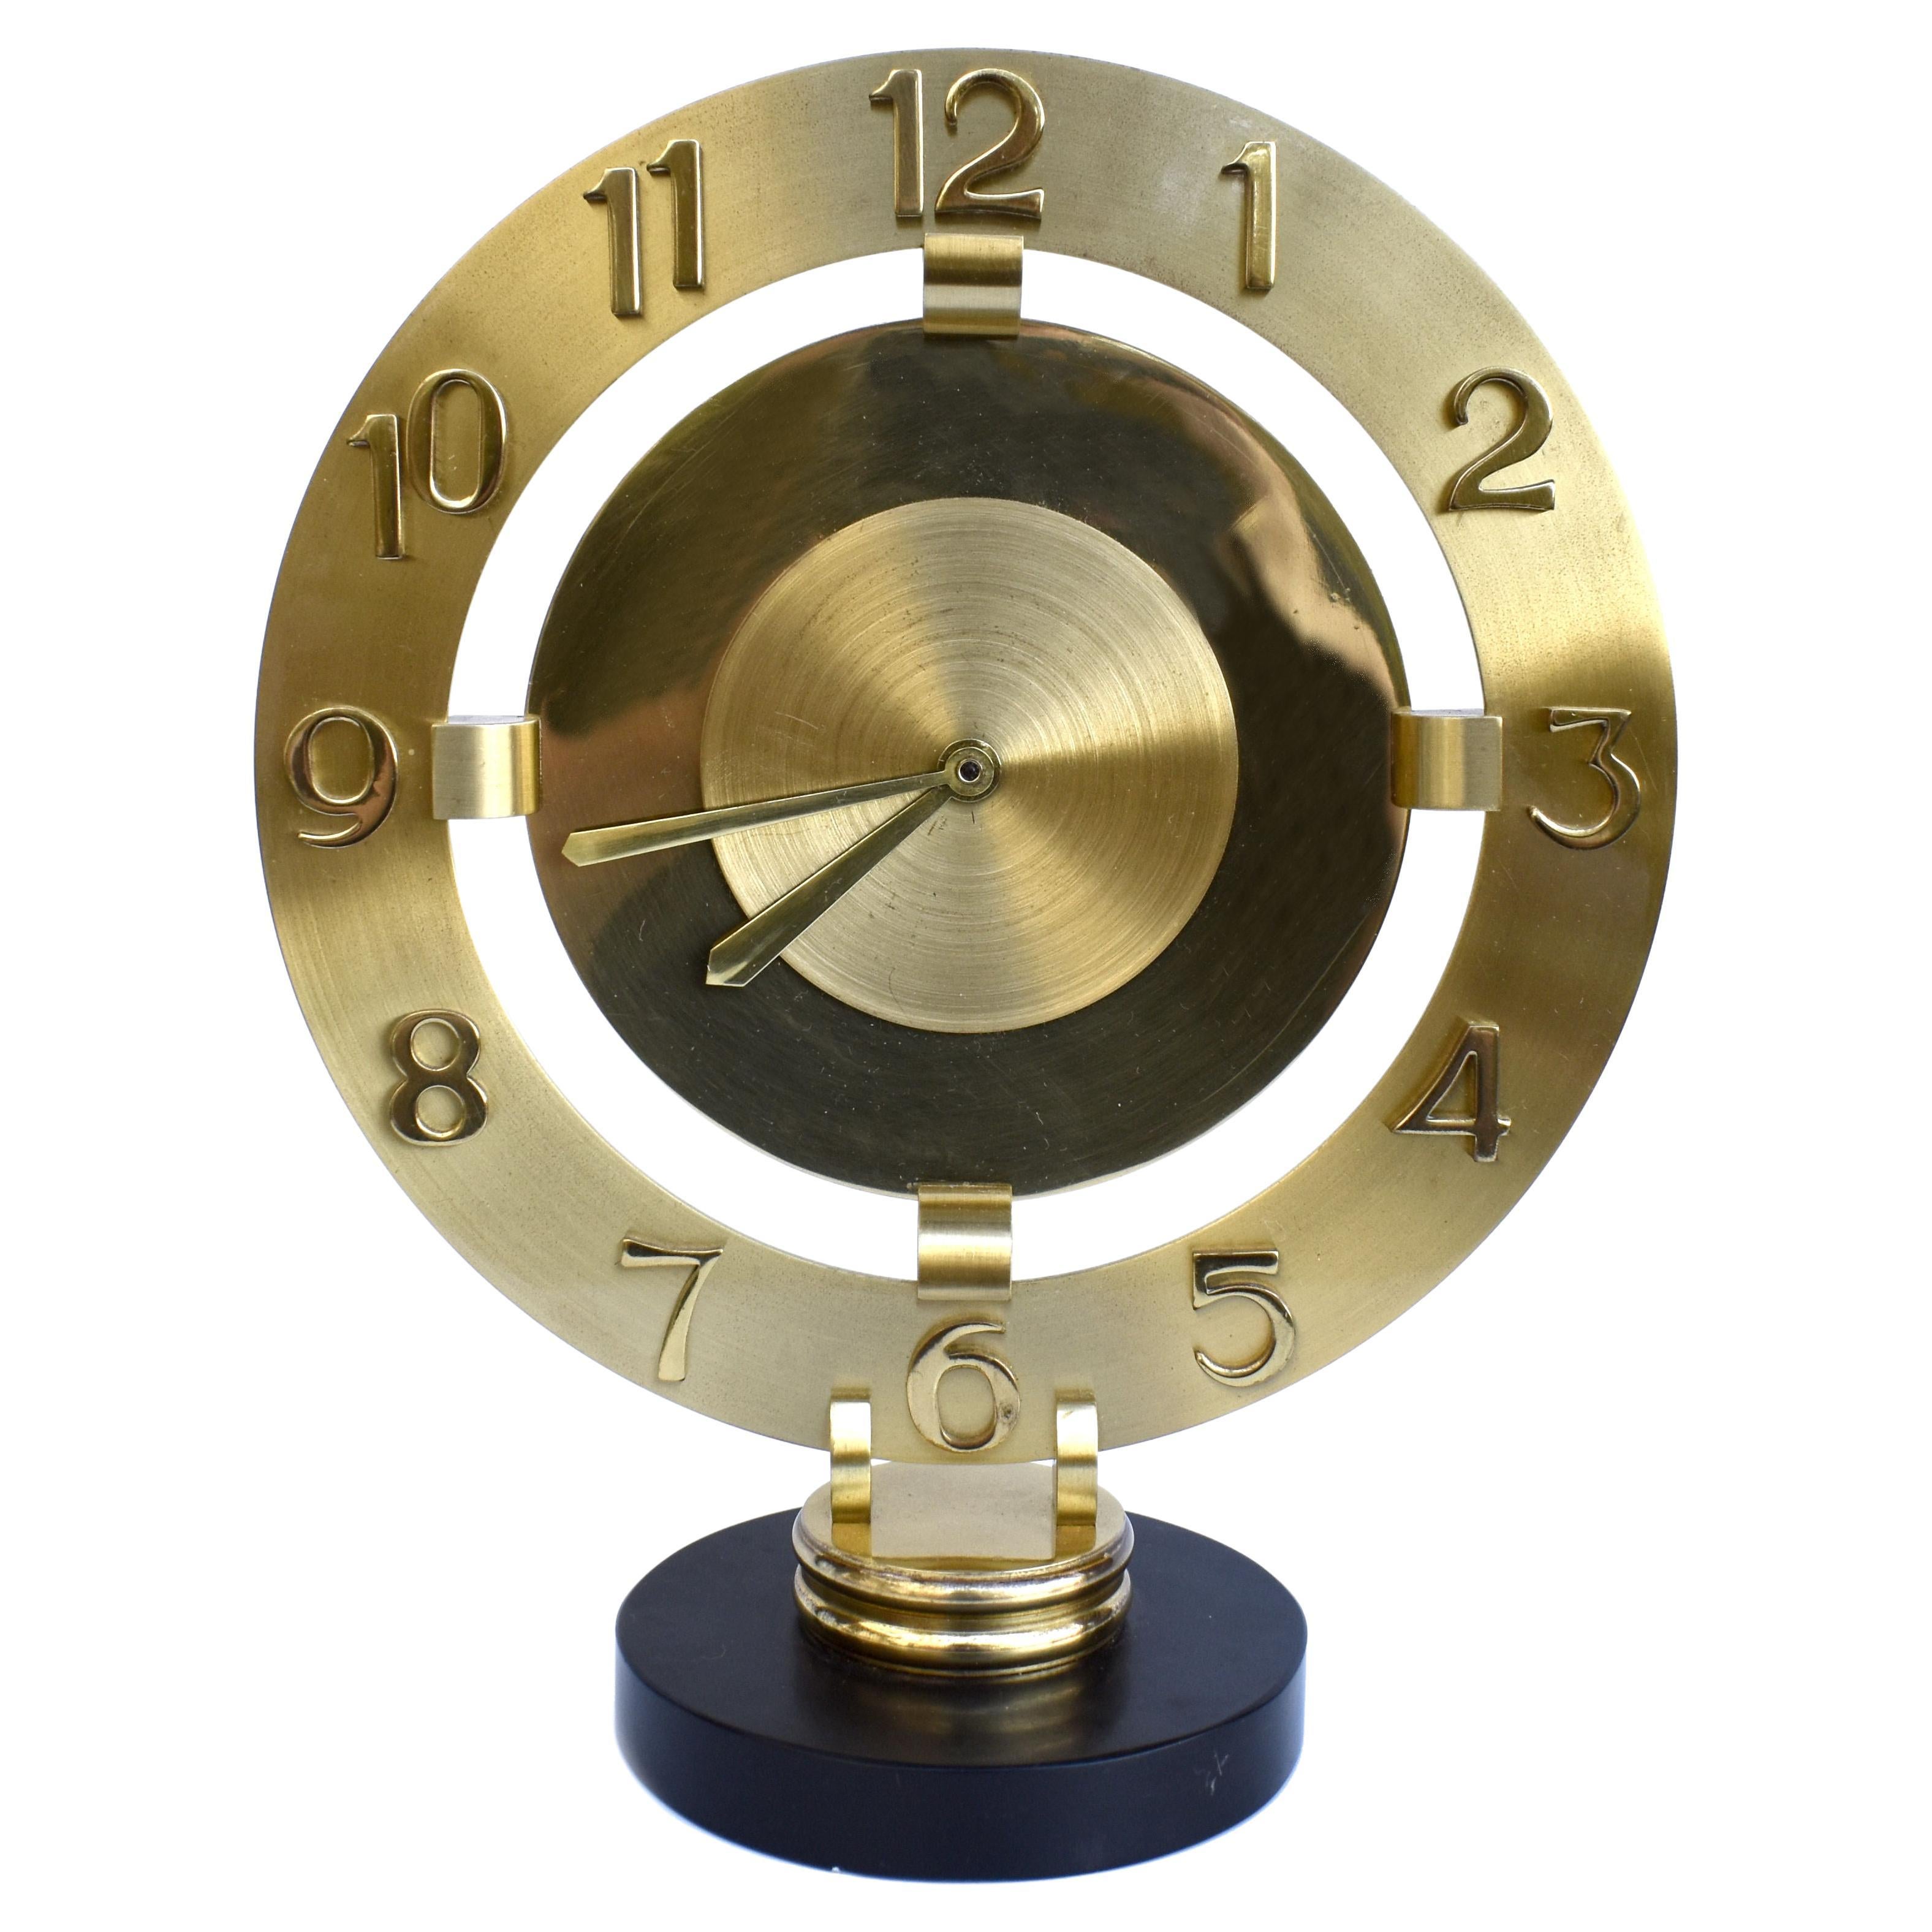 Art Deco Modernist Mantle Clock By Bayard, French , c1940